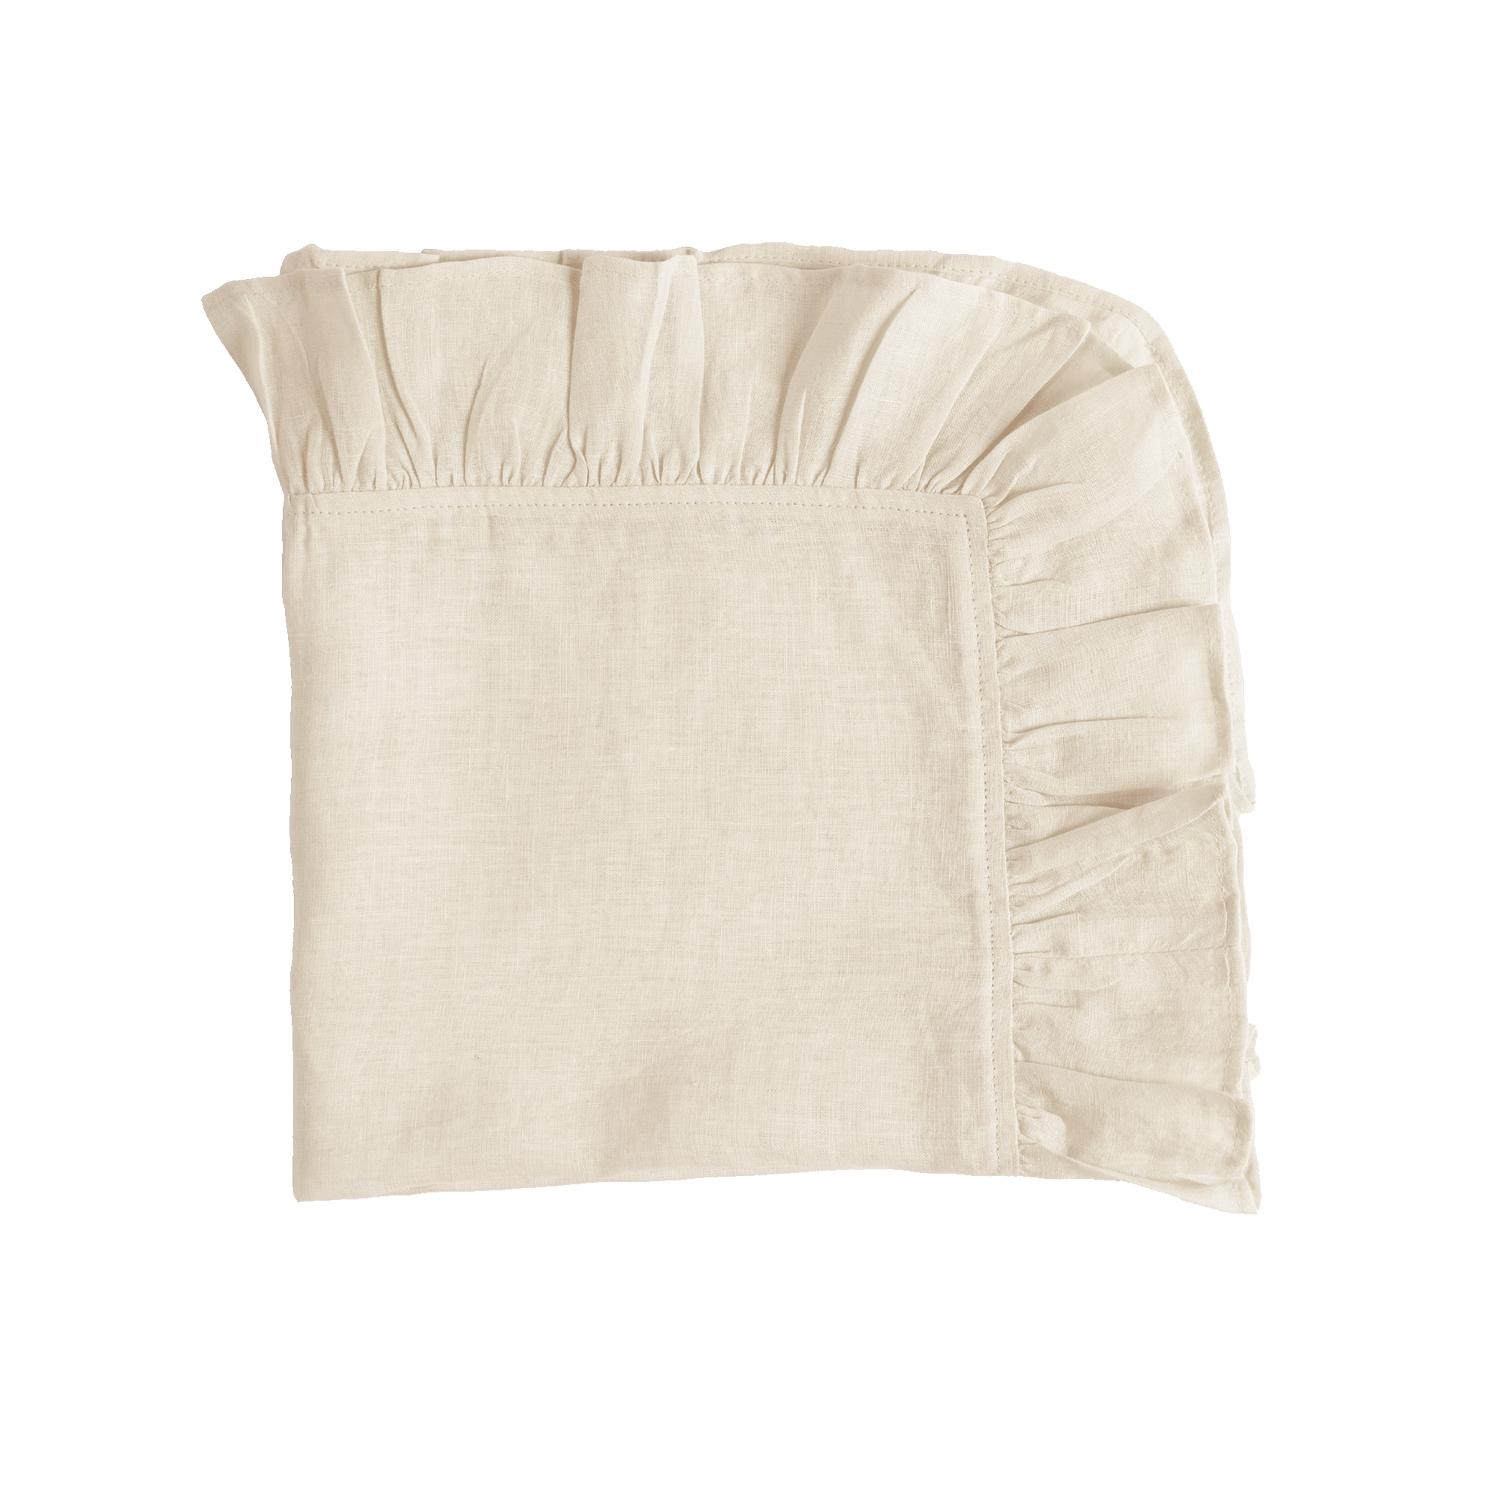 Bell napkin - White 45x45 cm